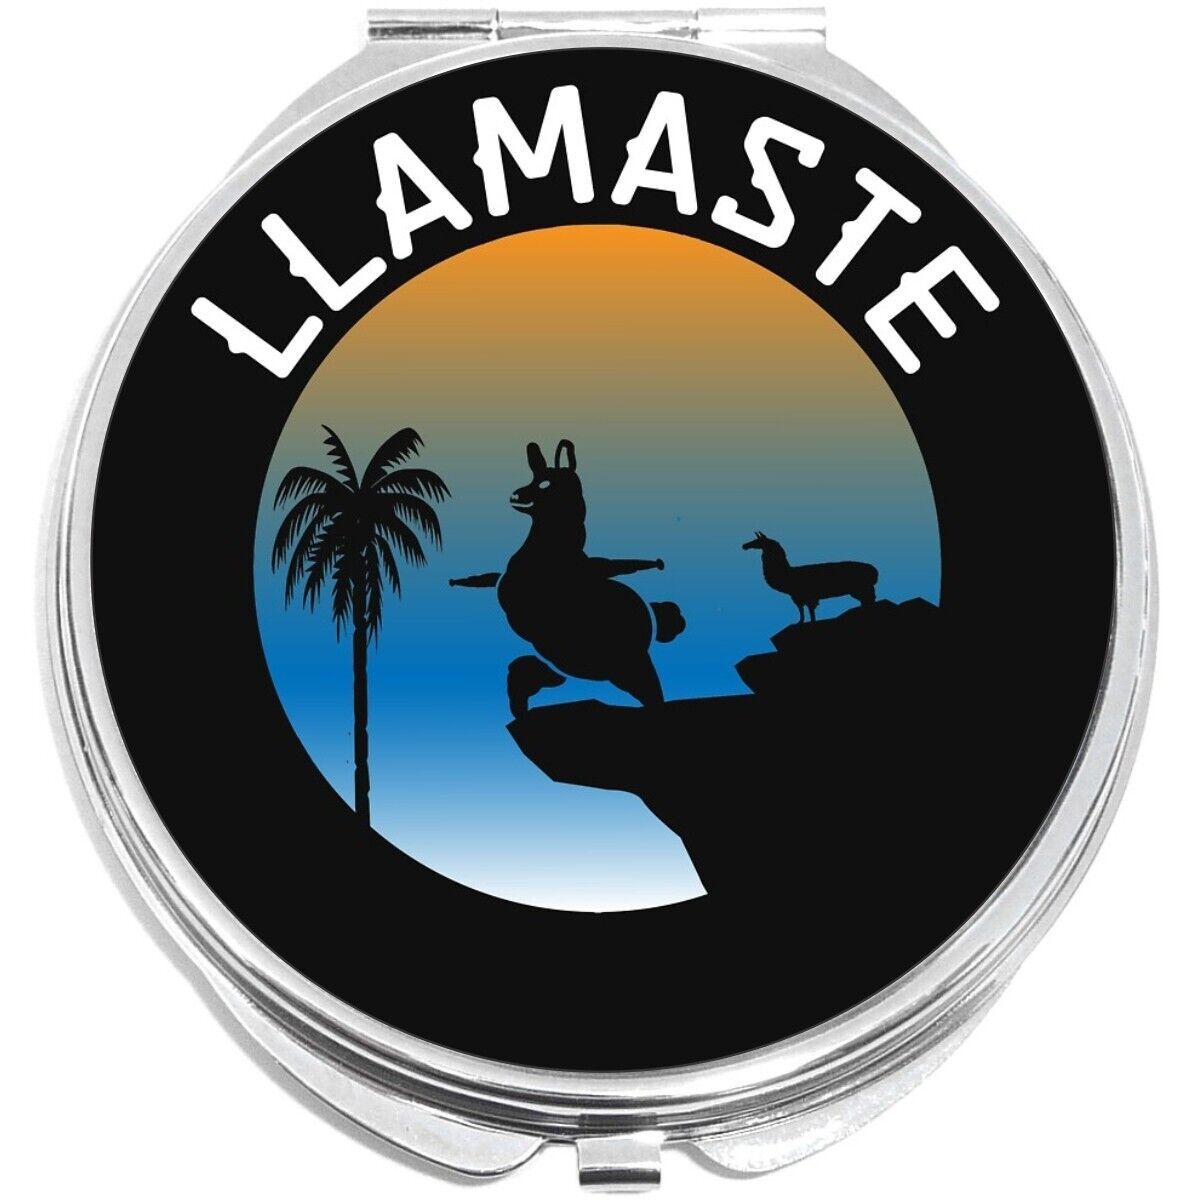 Llamaste Sunrise Palm Tree Llama Compact with Mirrors - for Pocket or Purse - $11.76